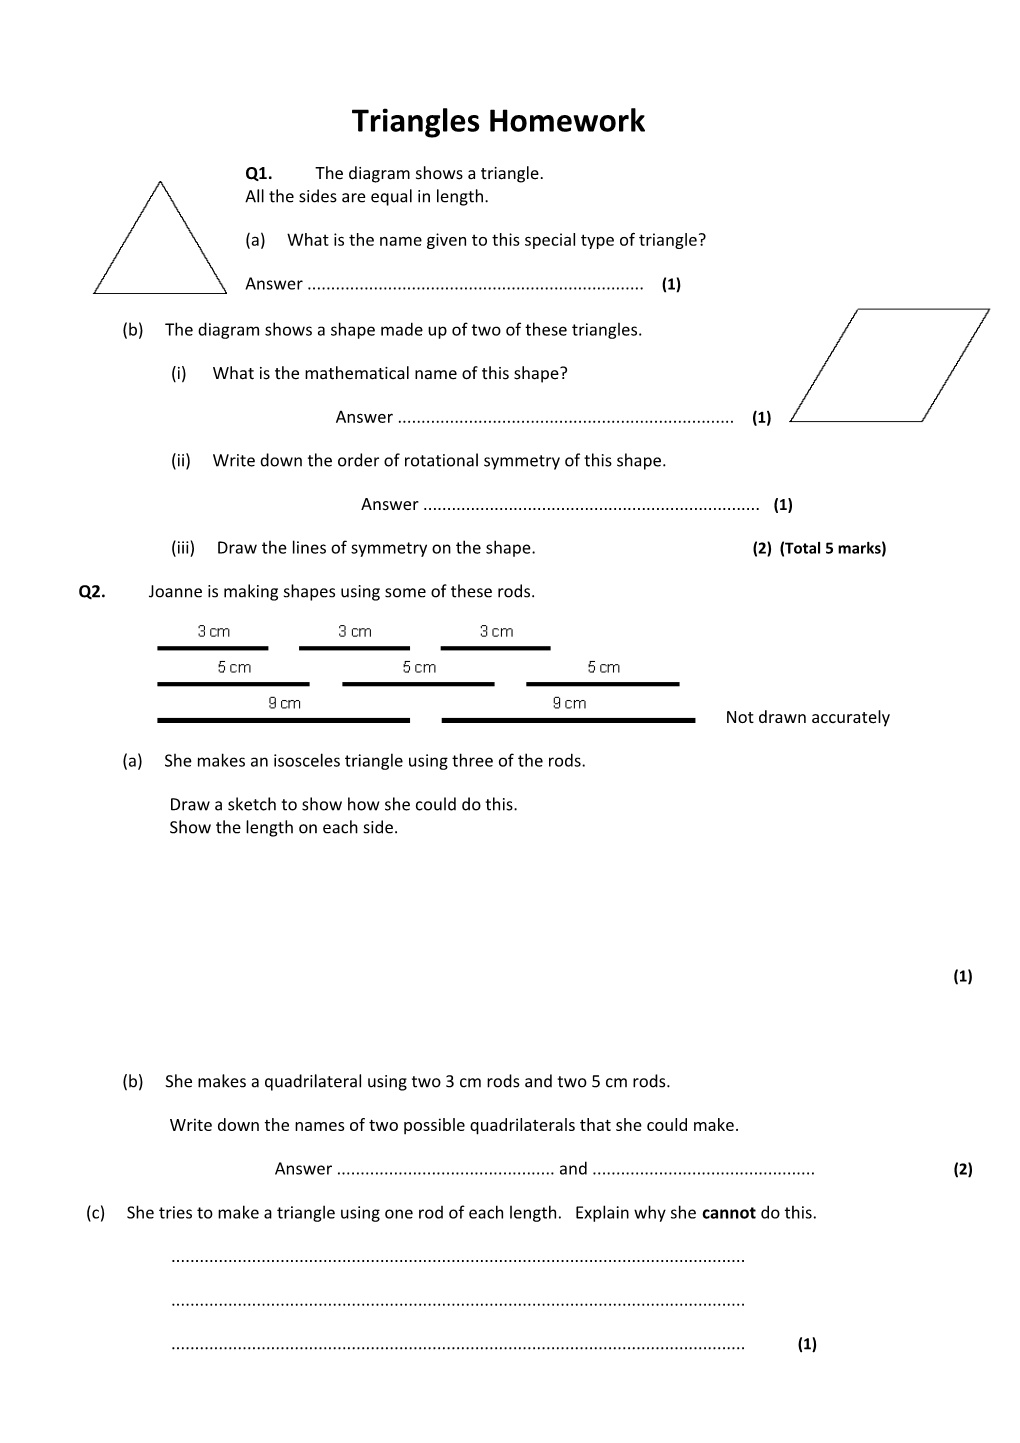 Triangles Homework